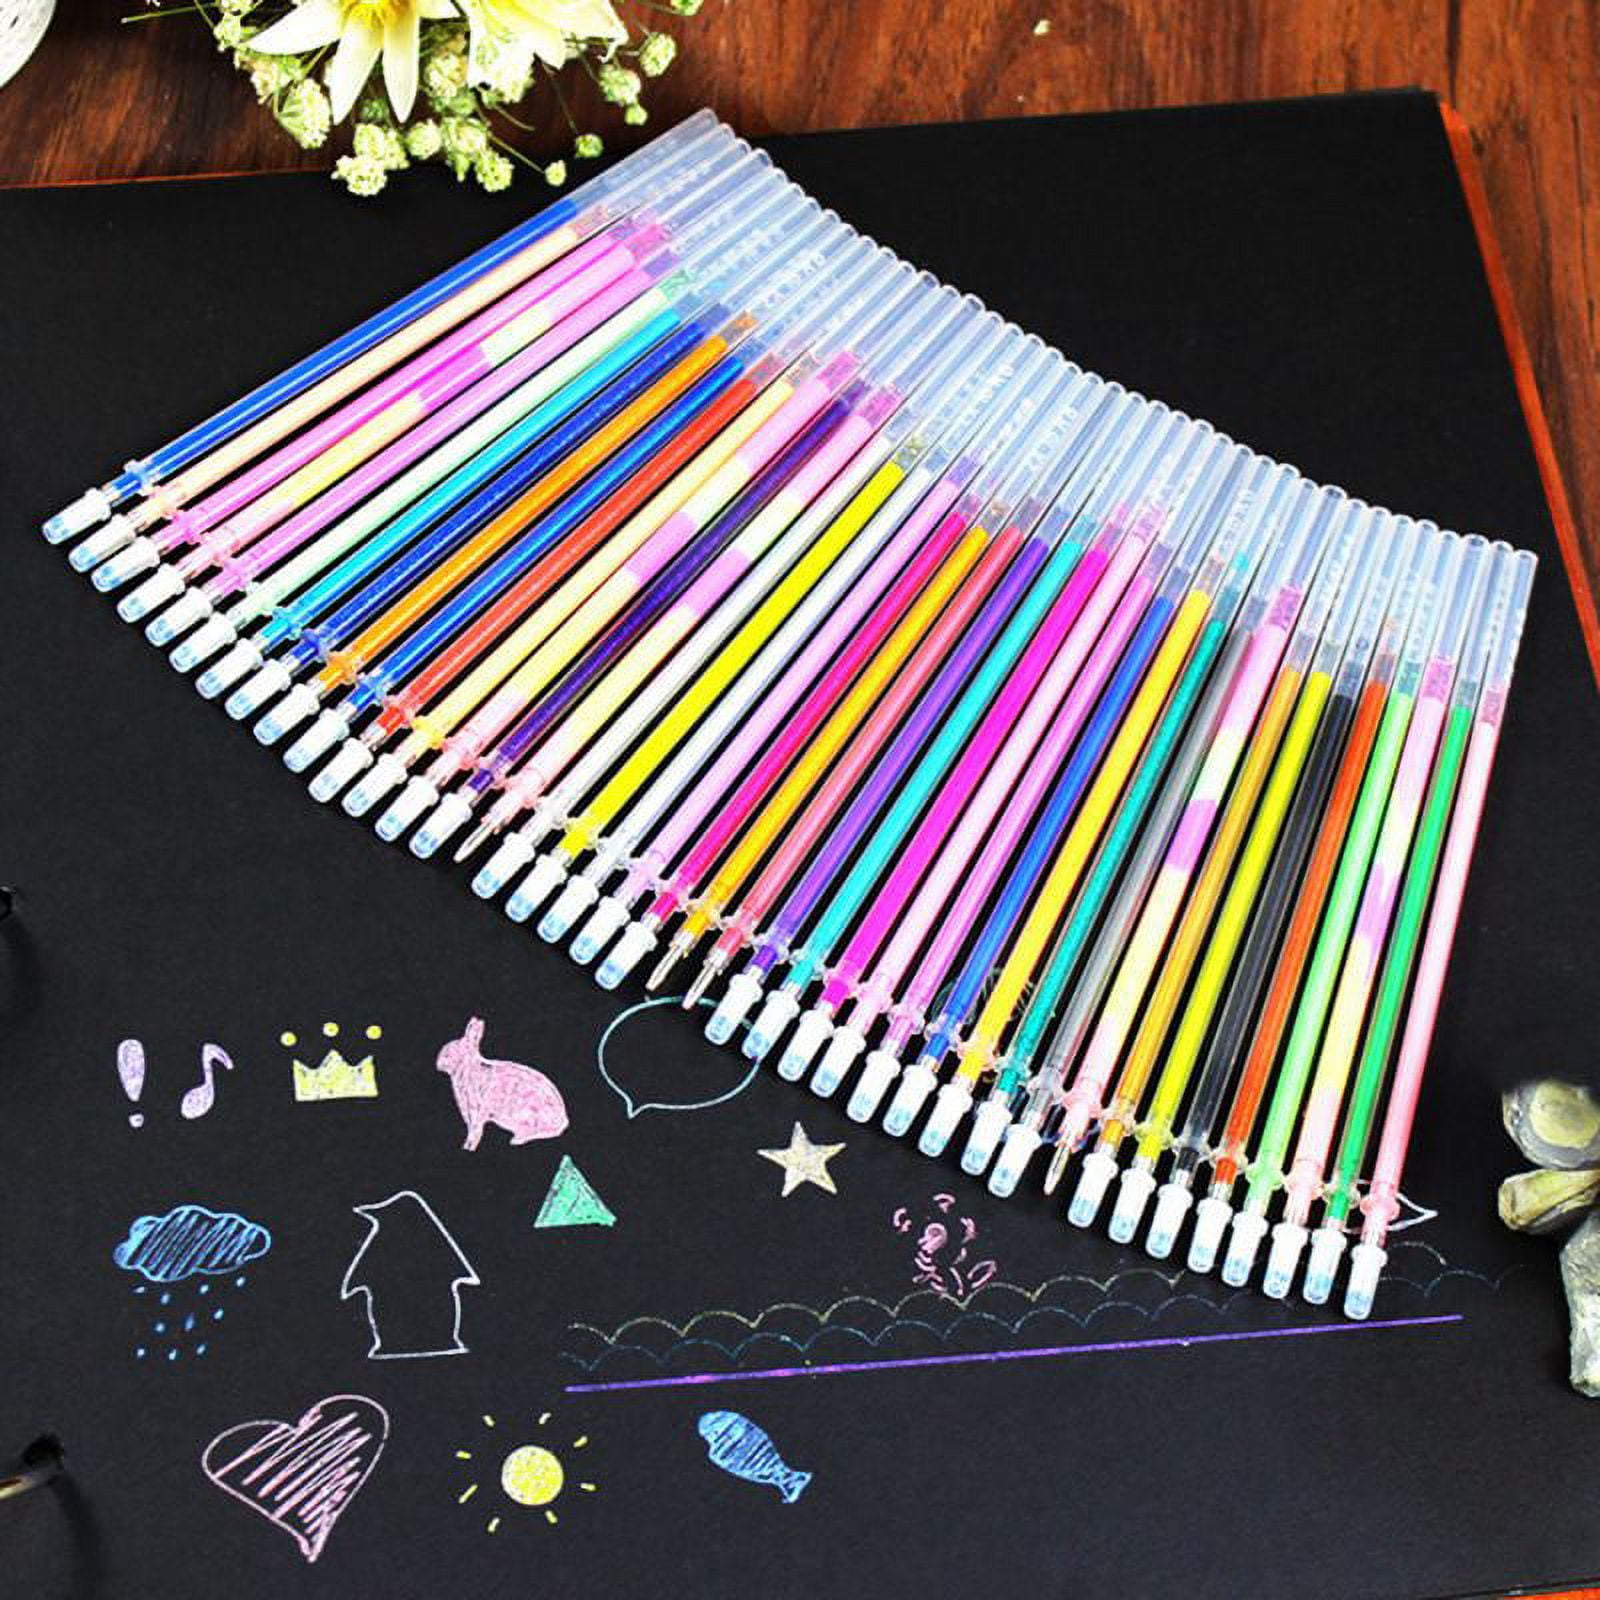 Gunsamg Art Gel Pen Set, 80 Refills and 80 Gel Pens, Carrying Case,  Suitable for Adult Coloring, Kids Doodling, Scrapbooking, Drawing, Writing,  Sketching 